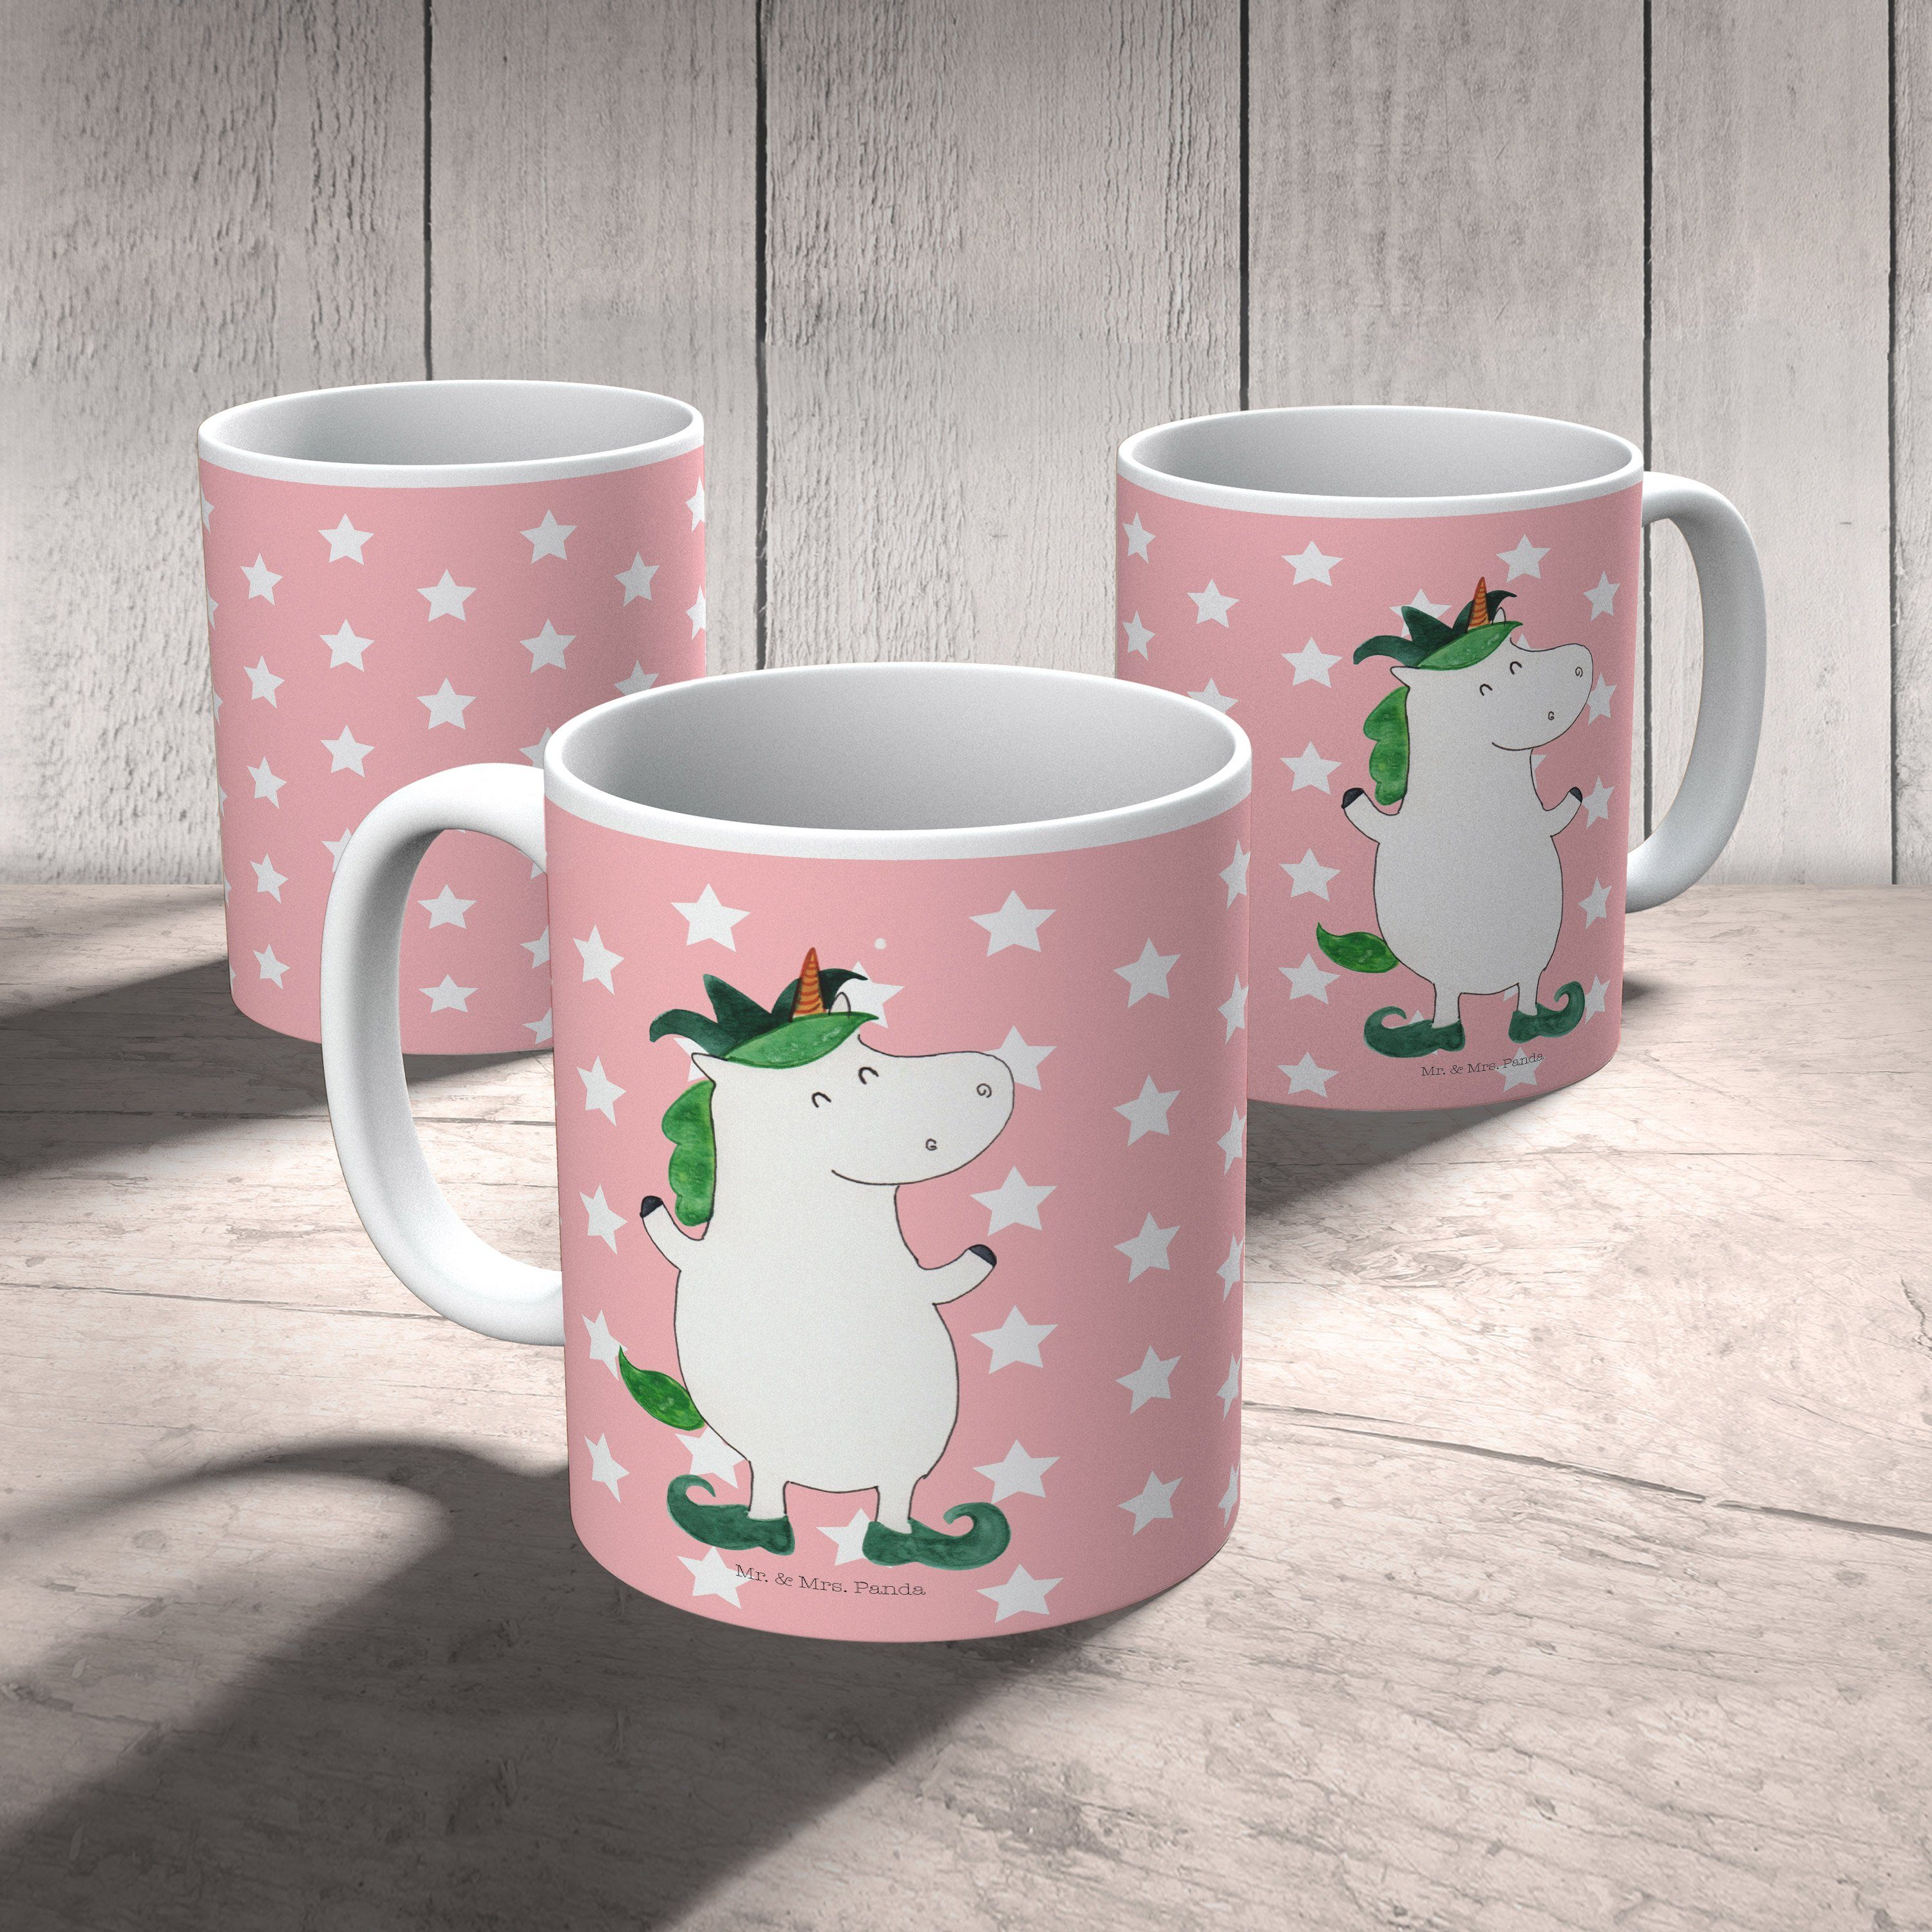 Mr. & Mrs. Panda Tasse Einhorn Joker - Rot Pastell - Geschenk, Pegasus, Kasper, Unicorn, Ges, Keramik